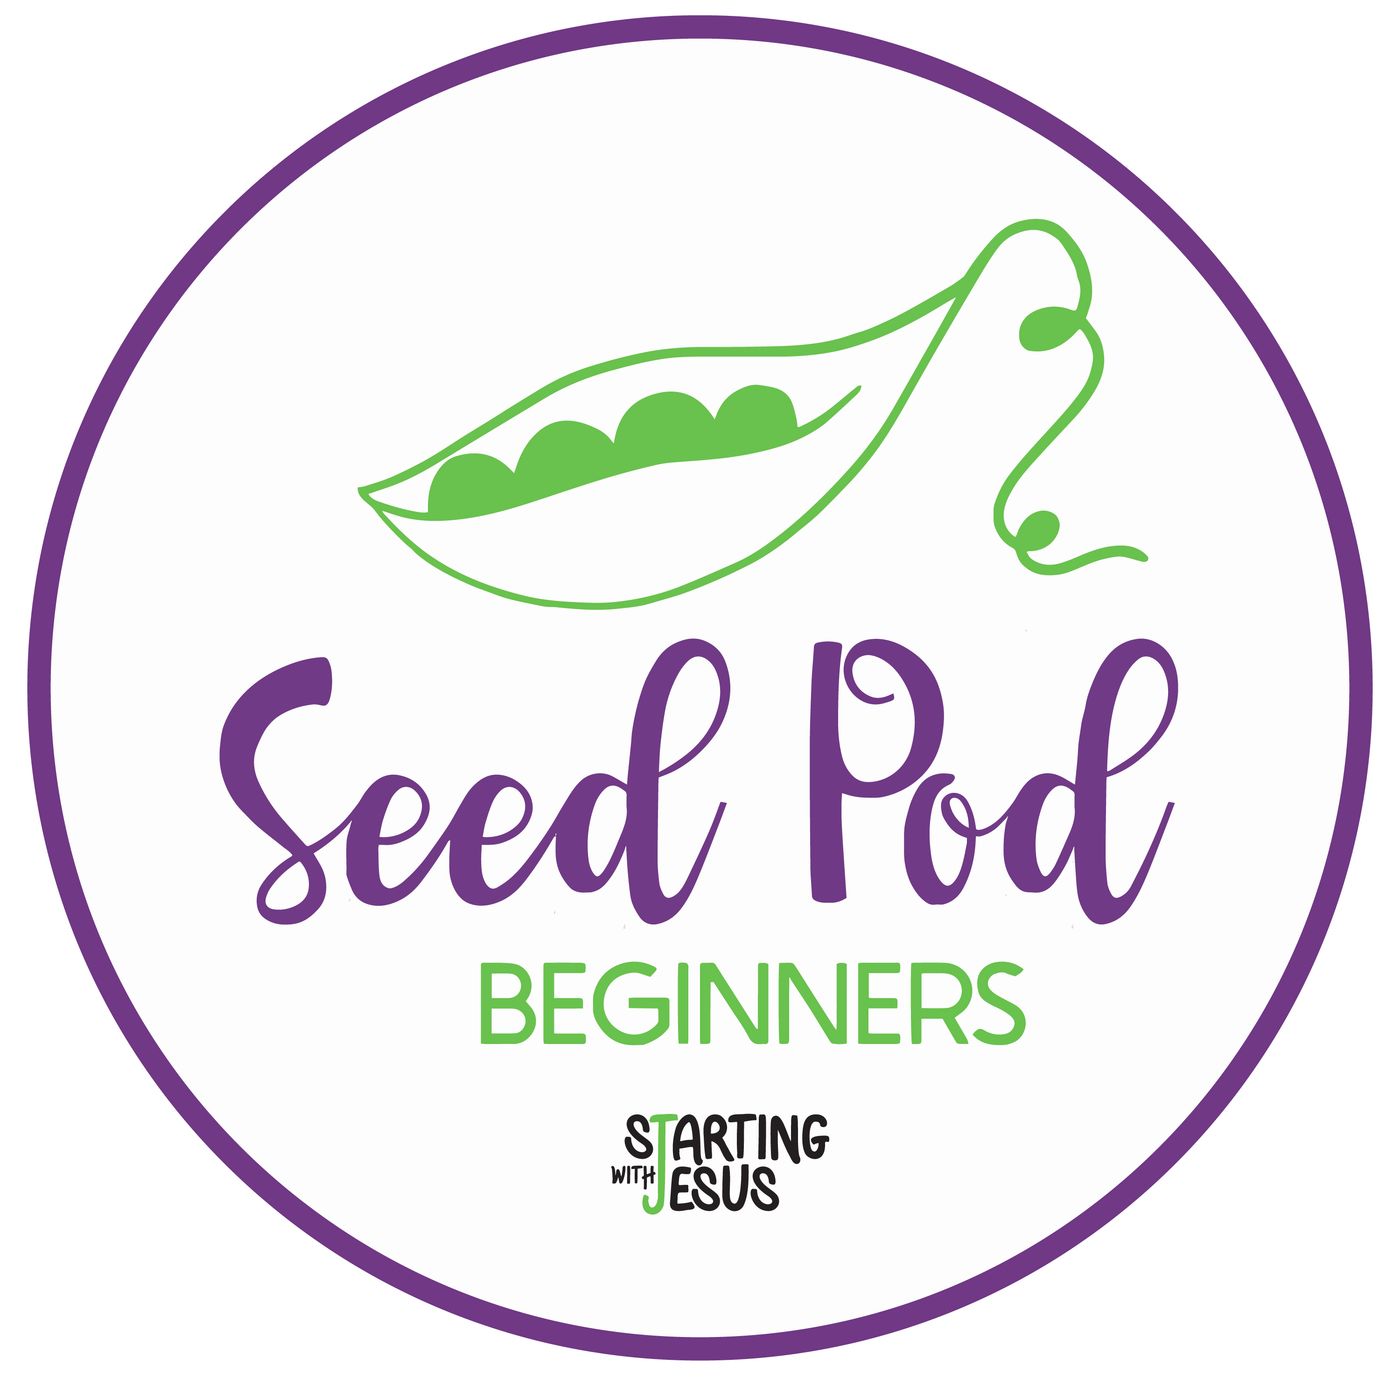 The SeedPod for Beginners